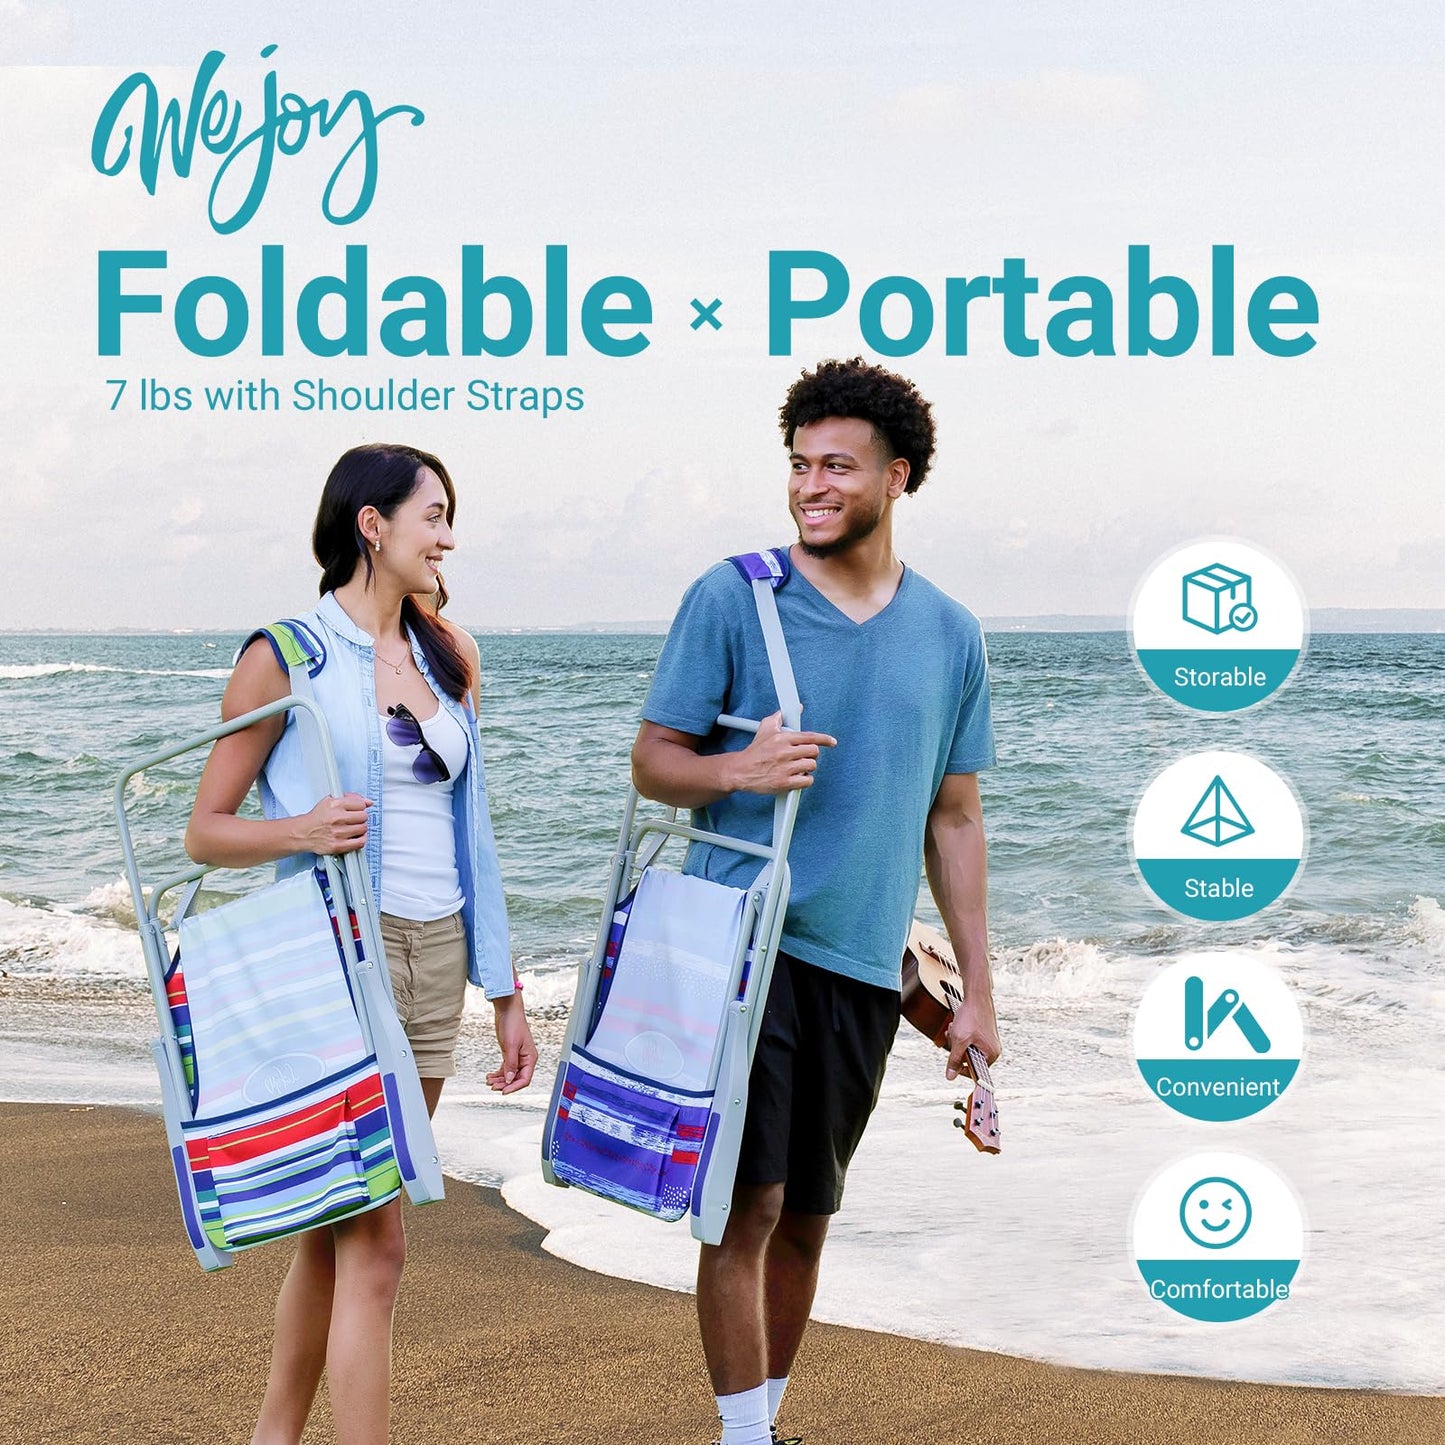 WEJOY 2 Pack Portable Blue Striped Print Folding Lawn Beach Chair